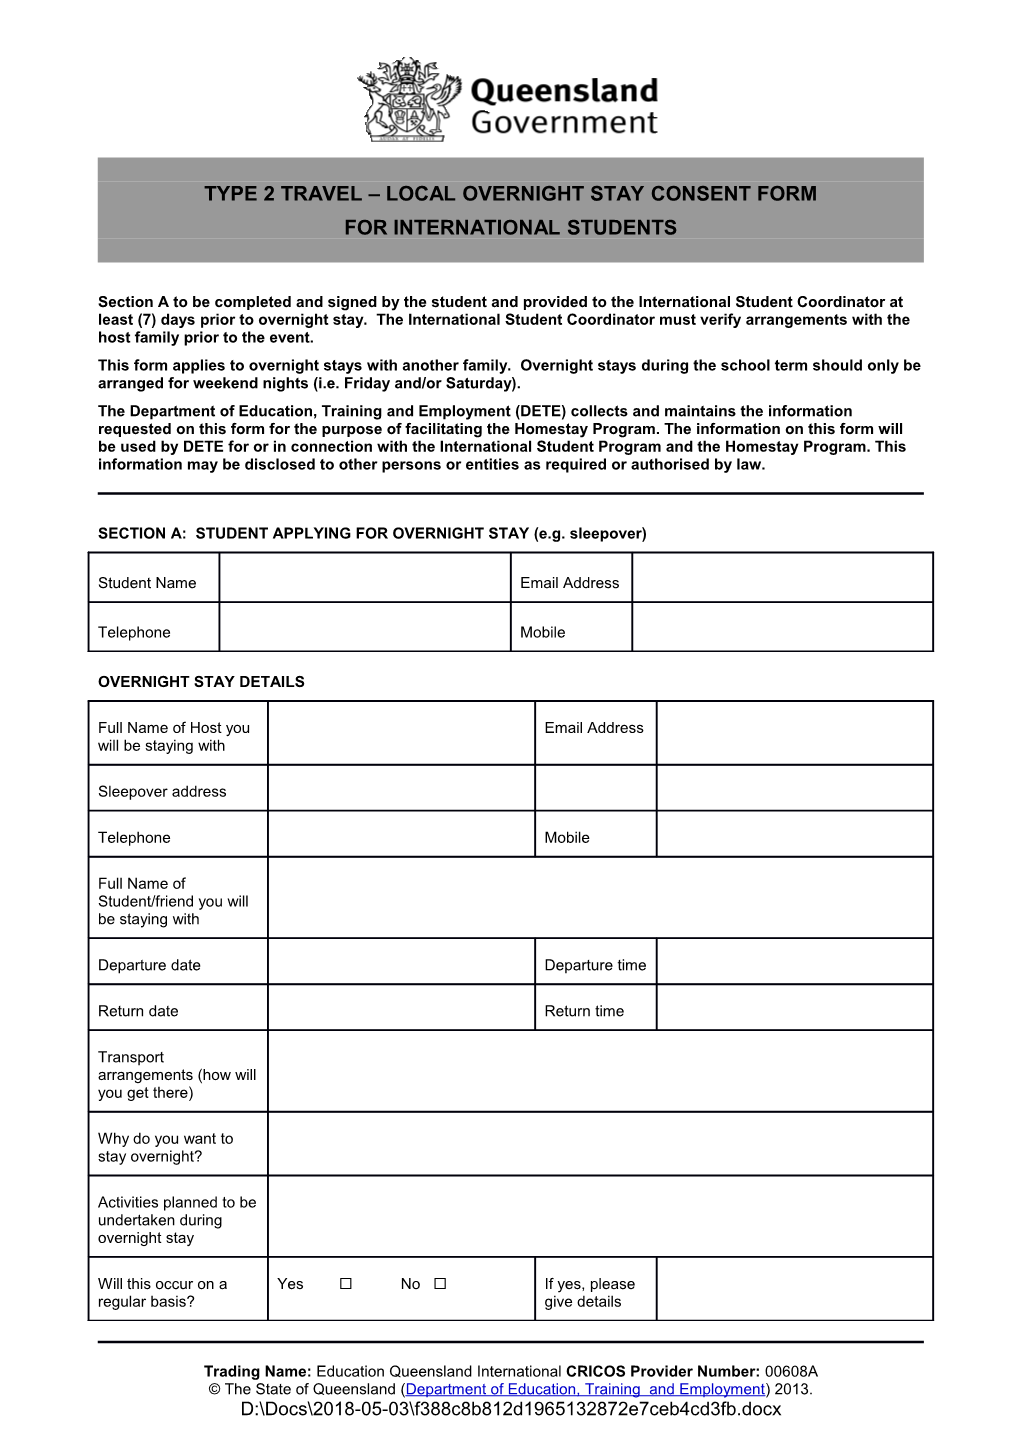 Type 2 Travel Consent Form April 2014